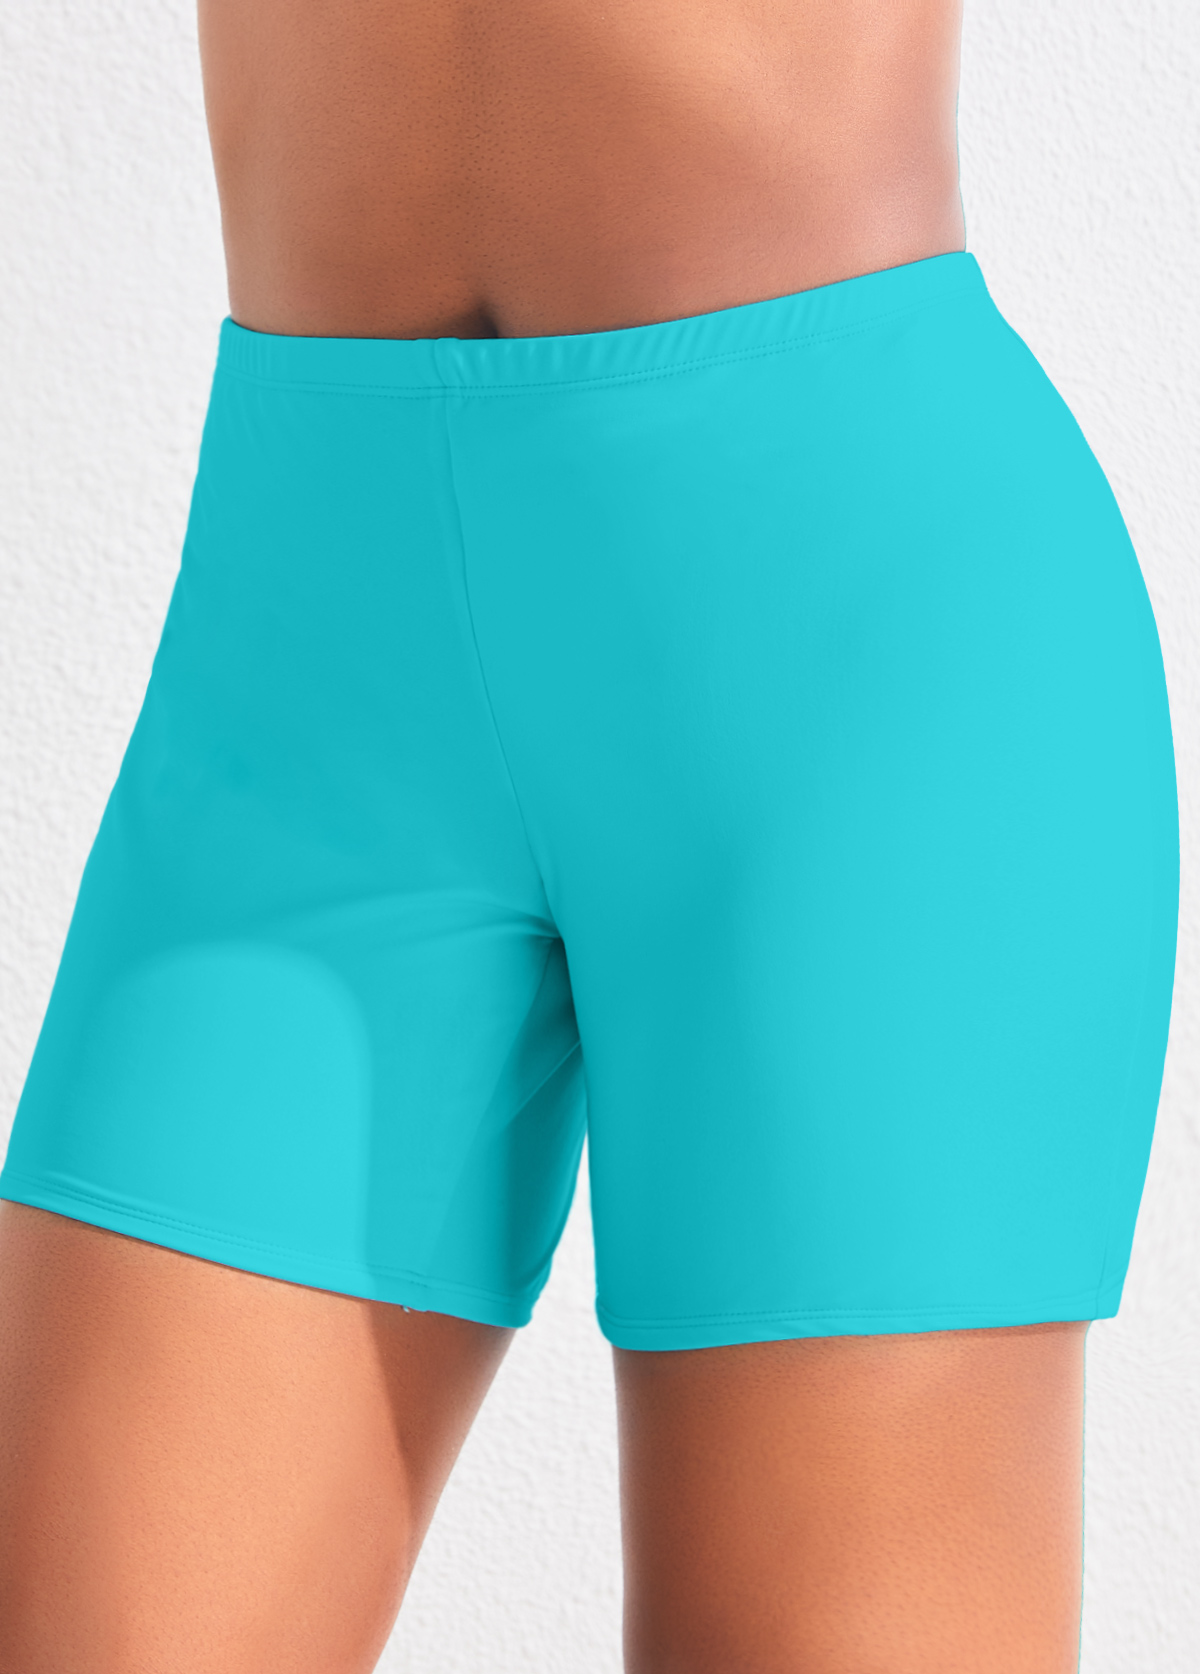 High Waisted Plus Size Neon Blue Swim Shorts